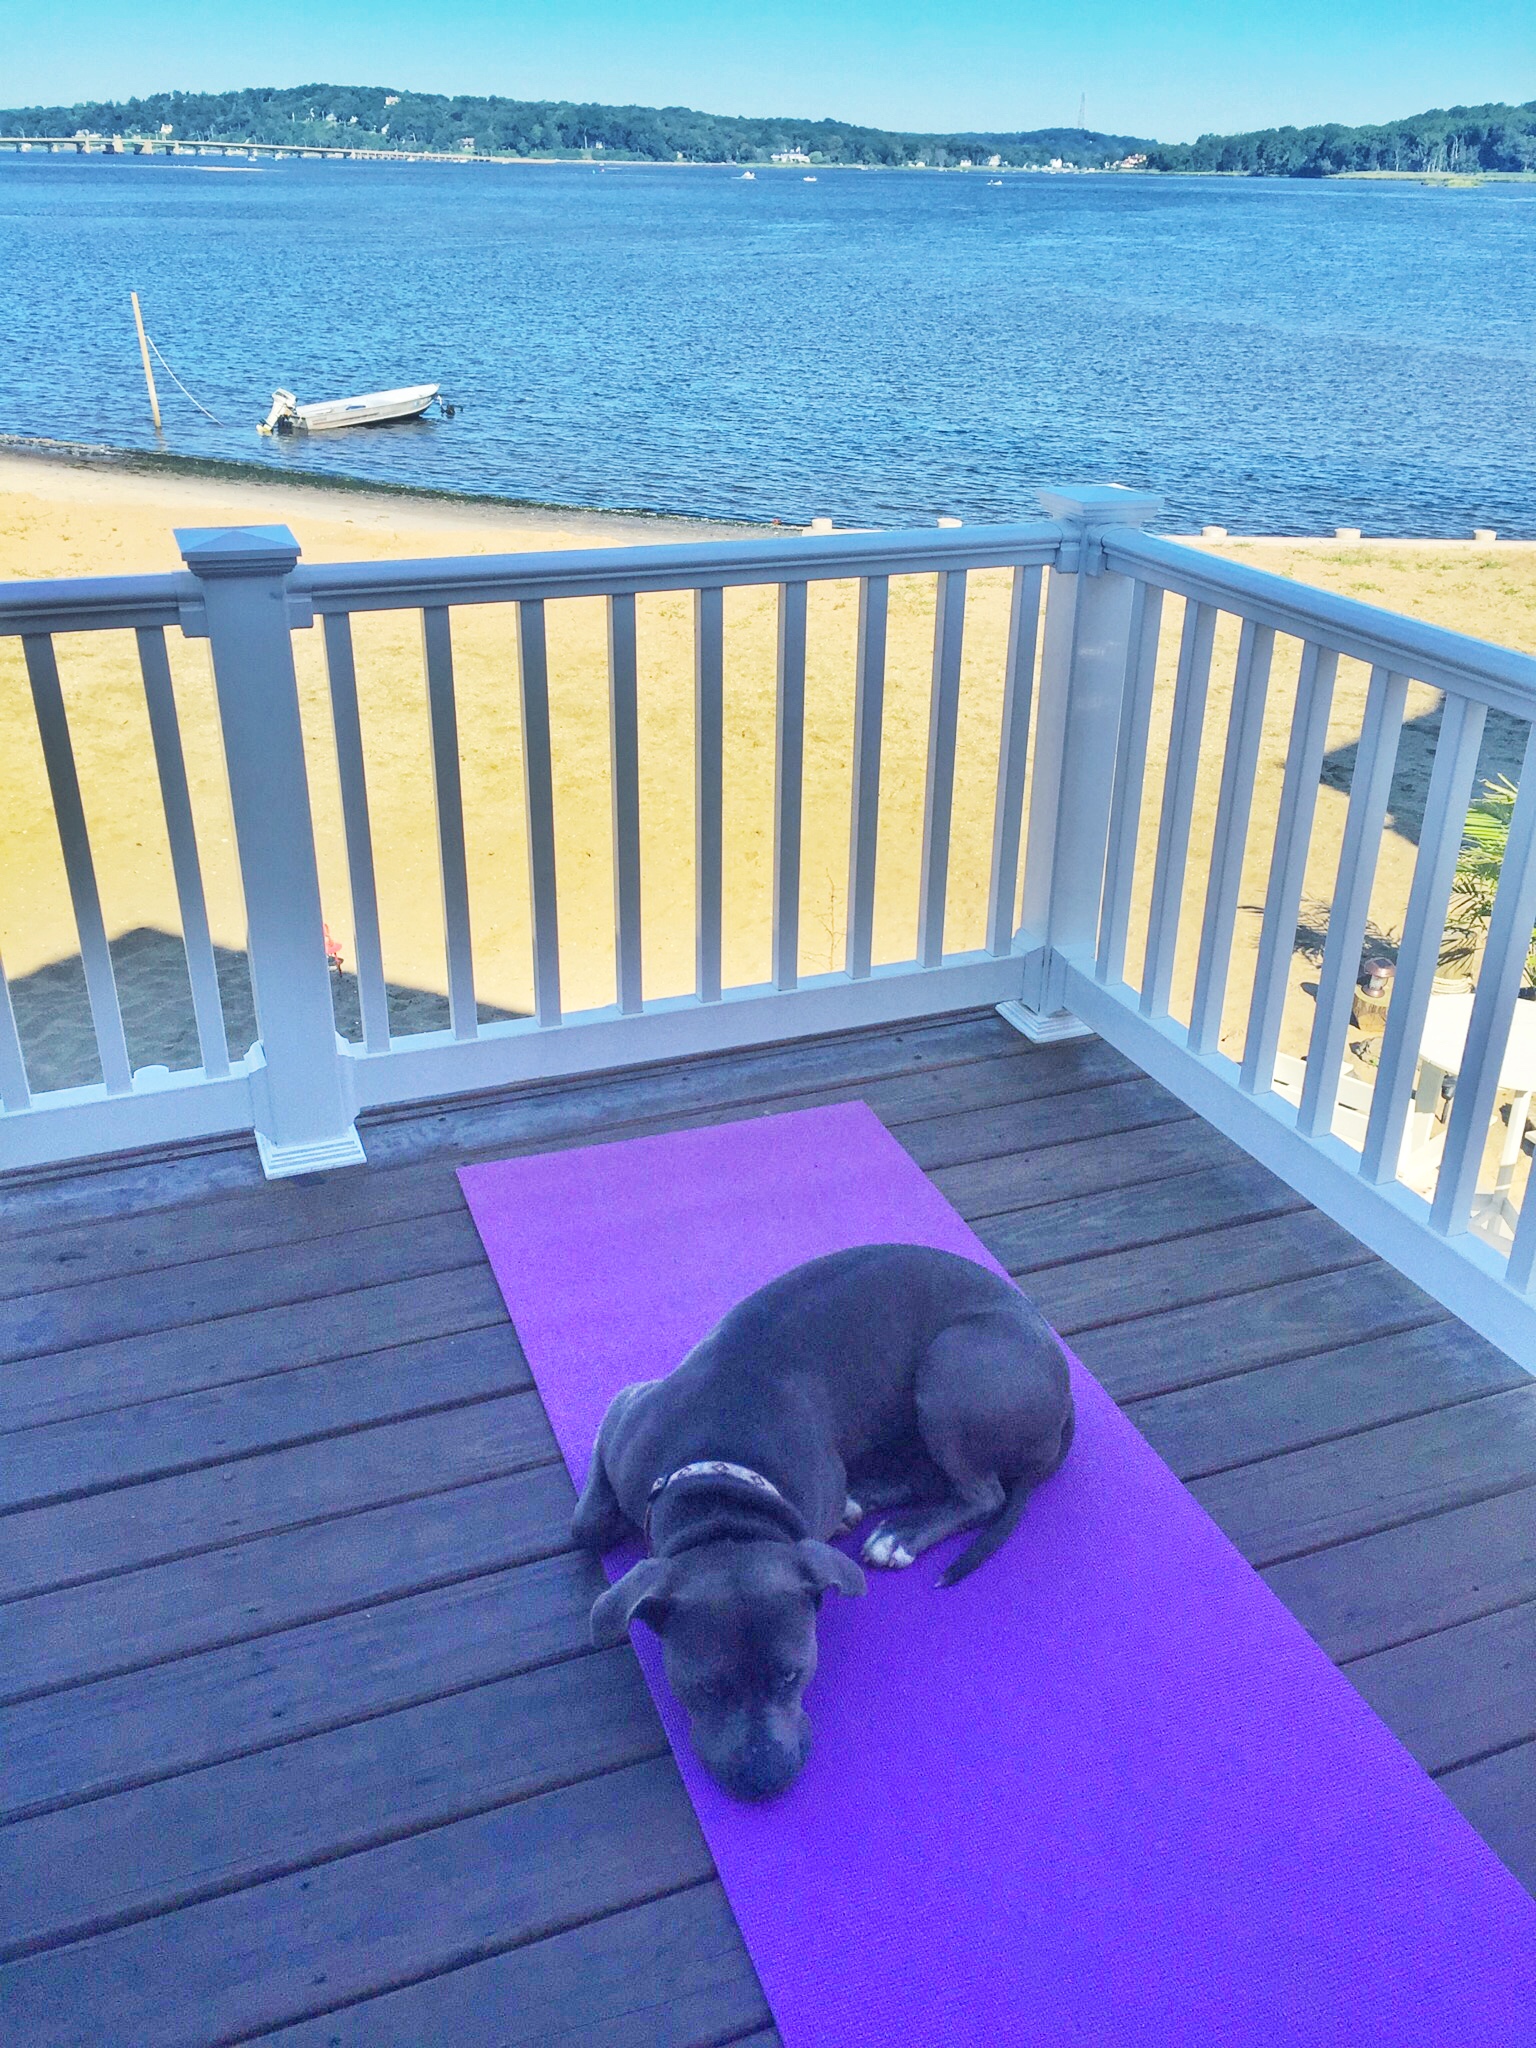 Jada hogging the yoga mat